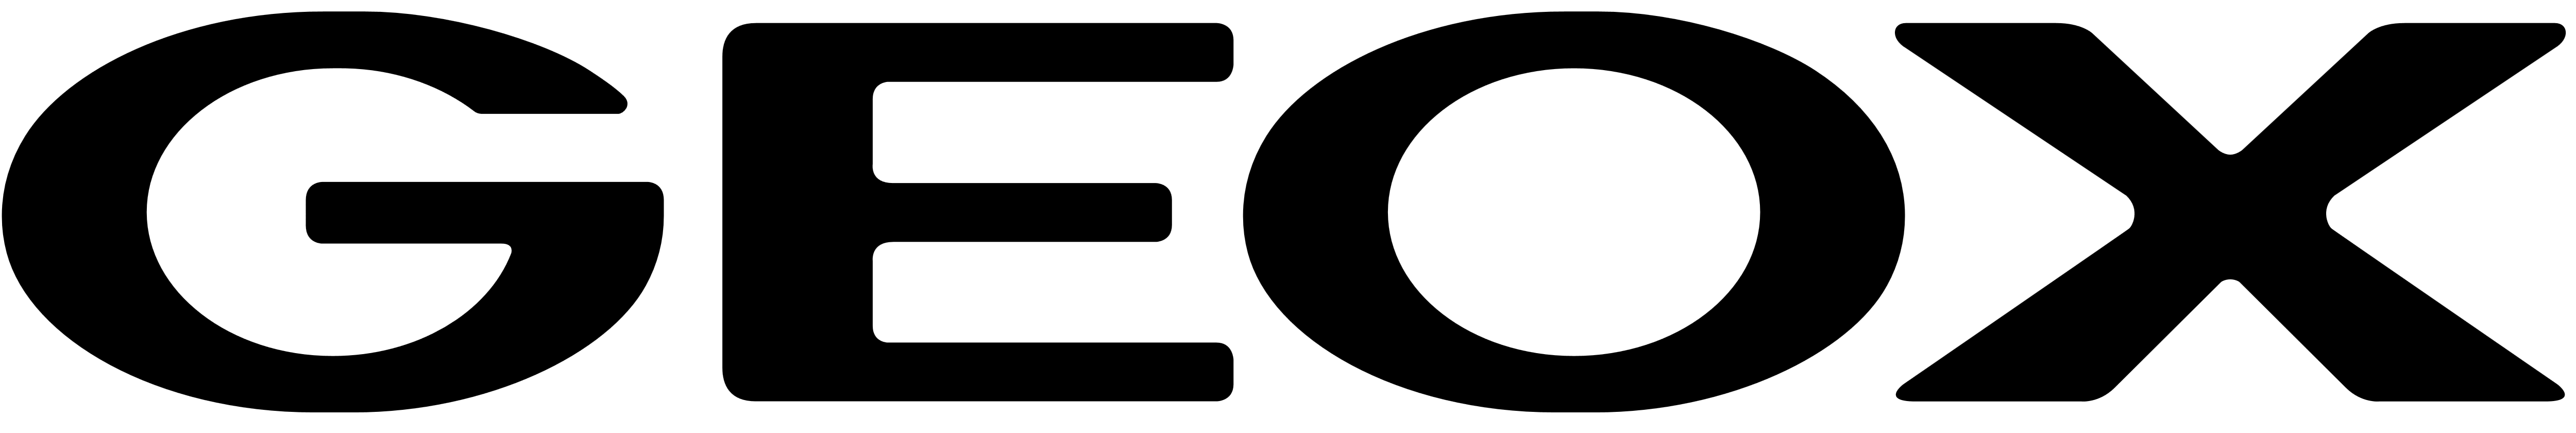 Geox Logo - Geox – Logos Download